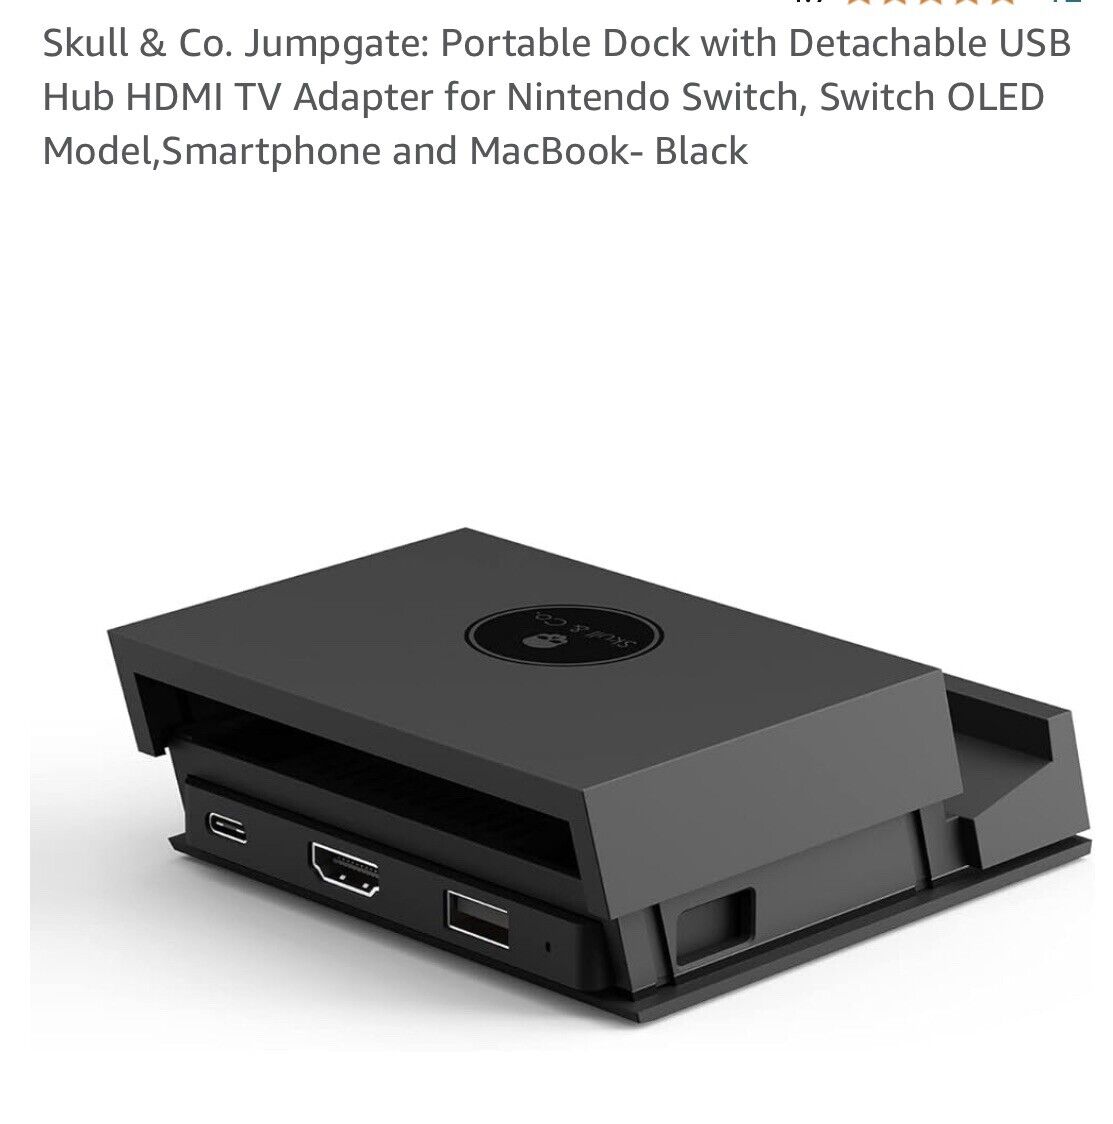 Glamorous Skull & Co. Jumpgate Portable Dock with Detachable USB Hub for Nintendo Switch on eBay